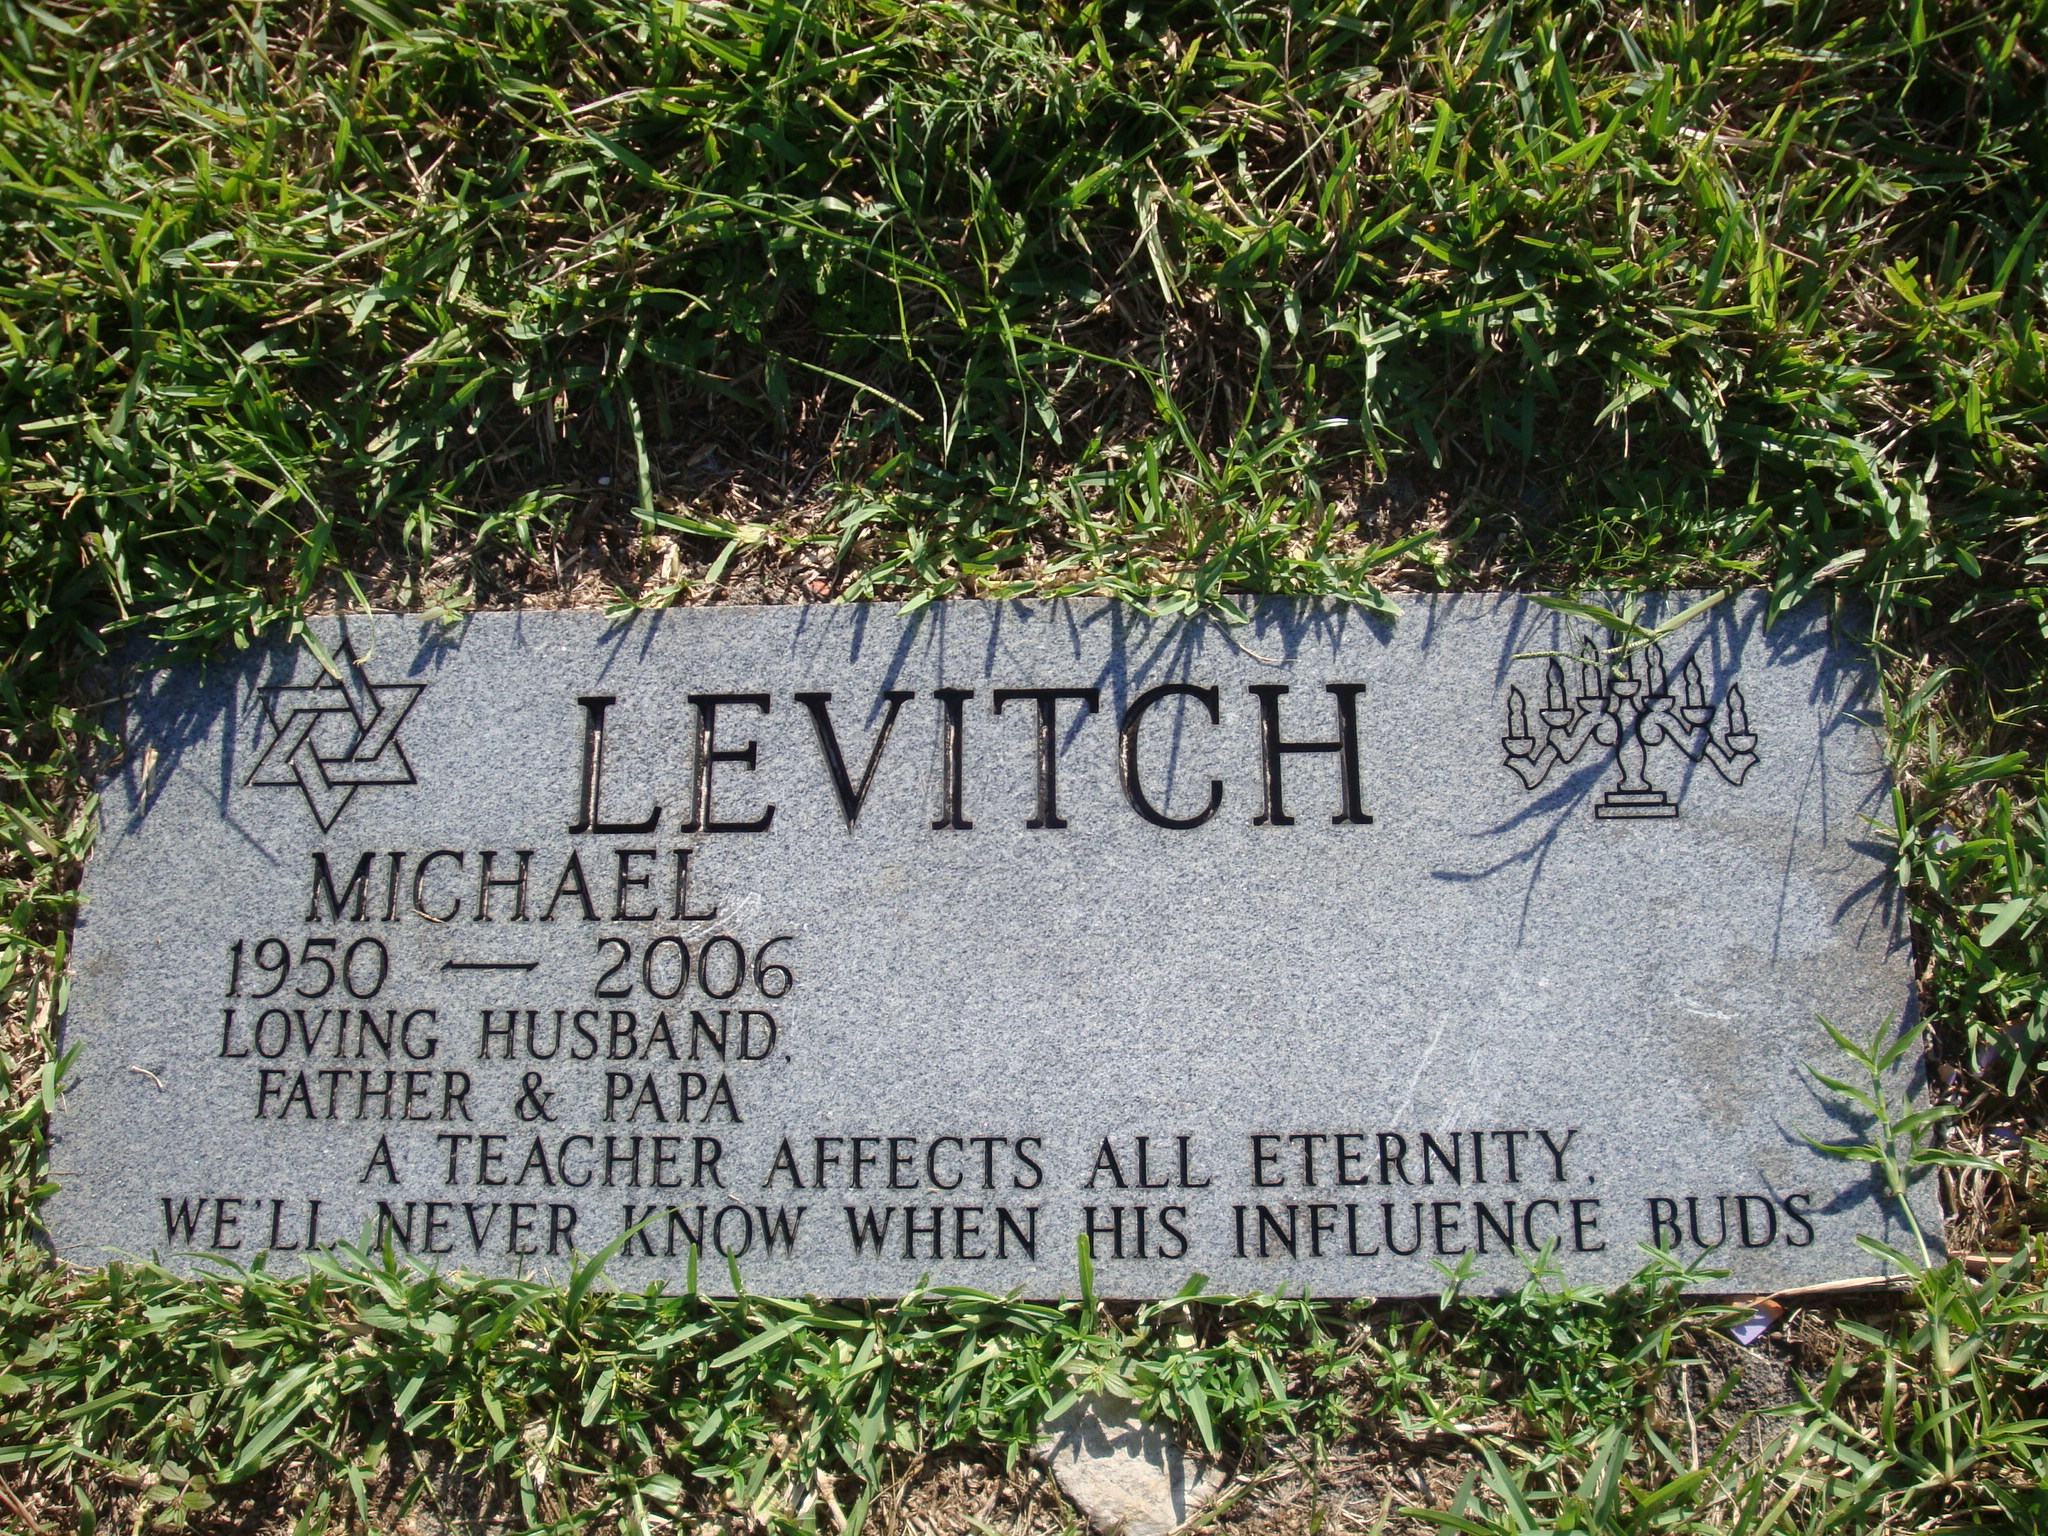 Michael Levitch